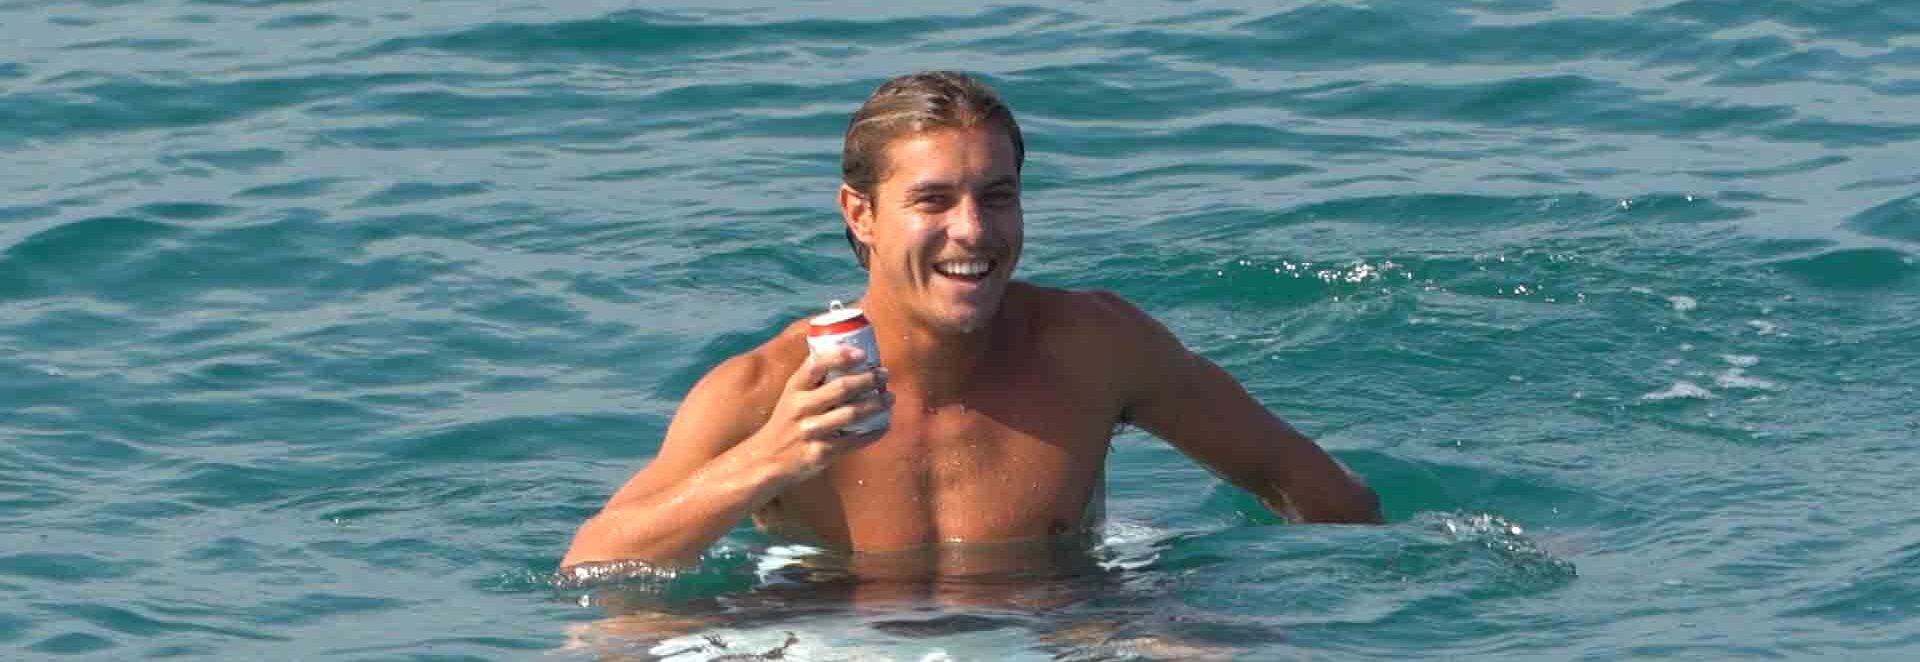 Encinitas residents mourn death of lifeguard, surfer Blake Dresner – Coast News